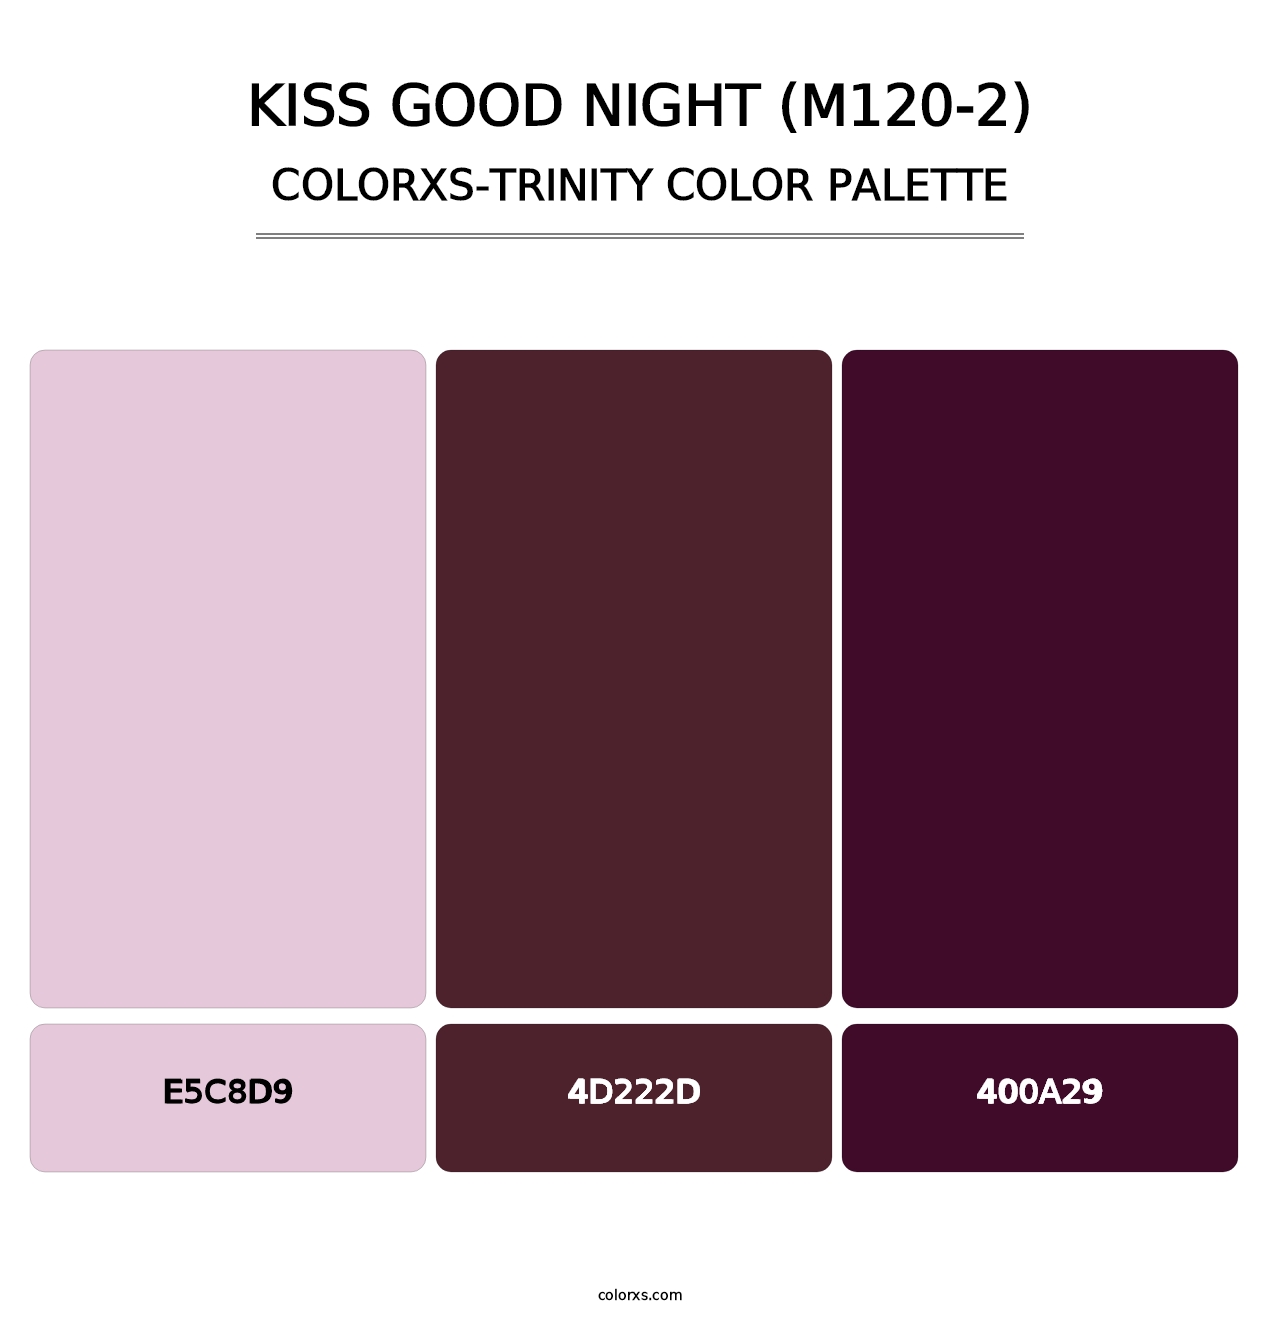 Kiss Good Night (M120-2) - Colorxs Trinity Palette